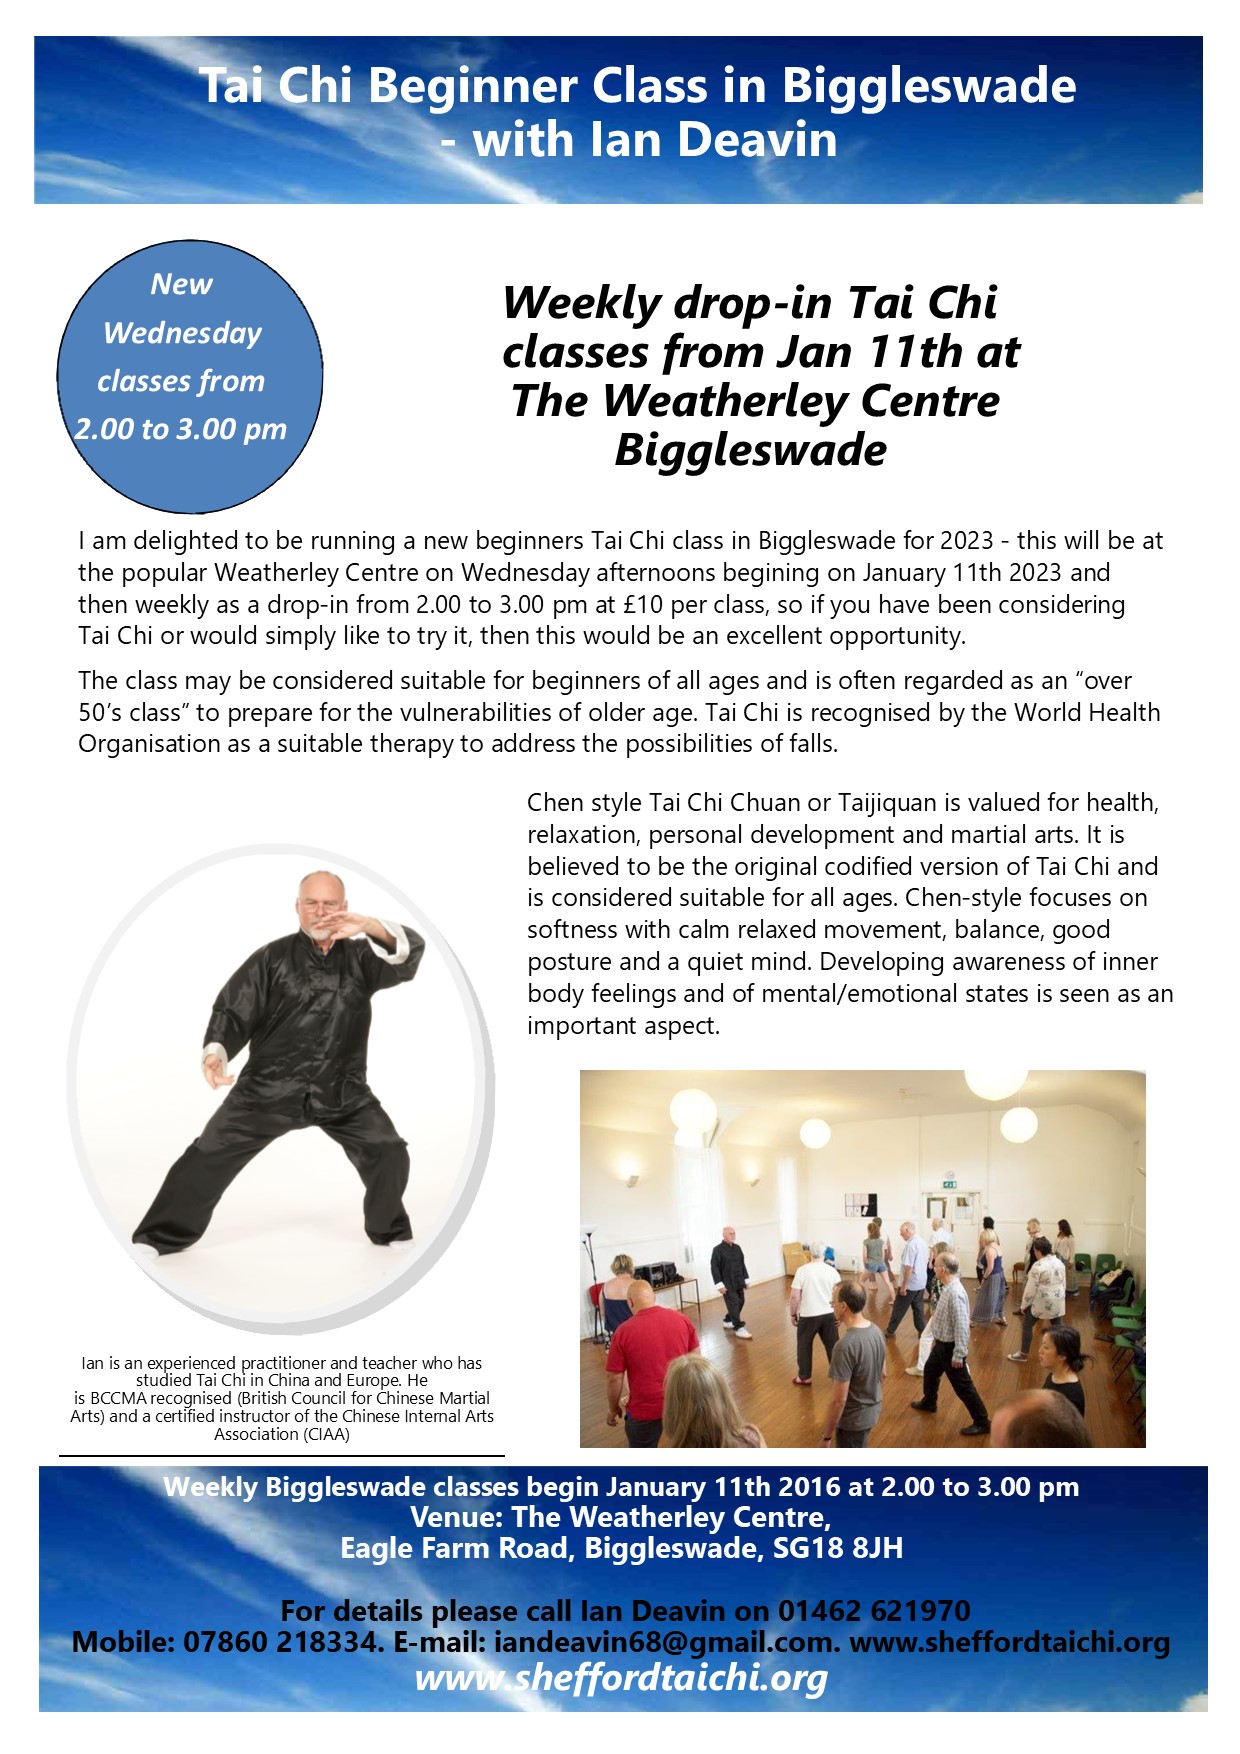 Tai Chi classes in Biggleswade